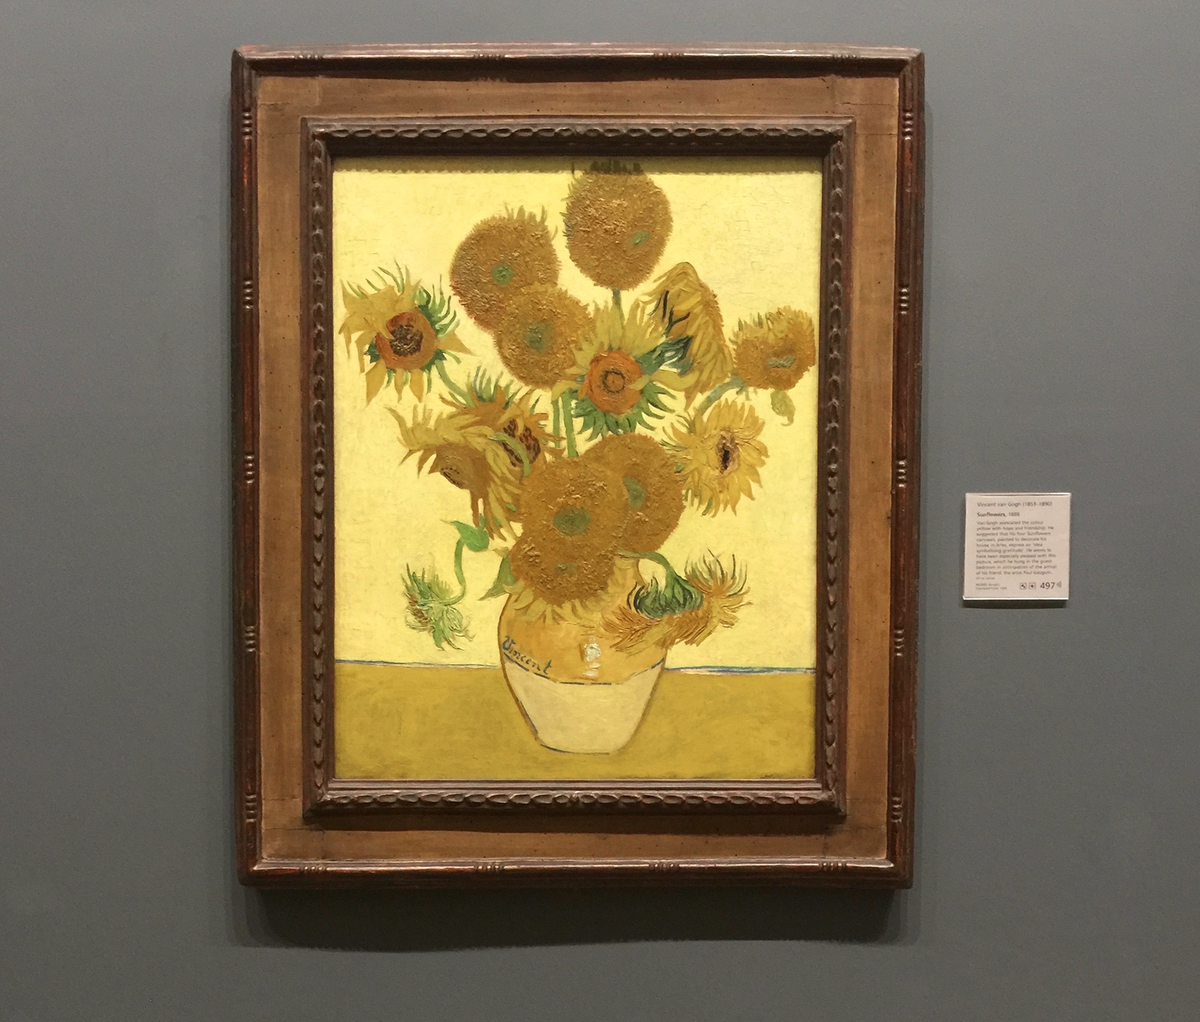 Van Gogh’s Sunflowers (August 1888)

Credit: The Art Newspaper